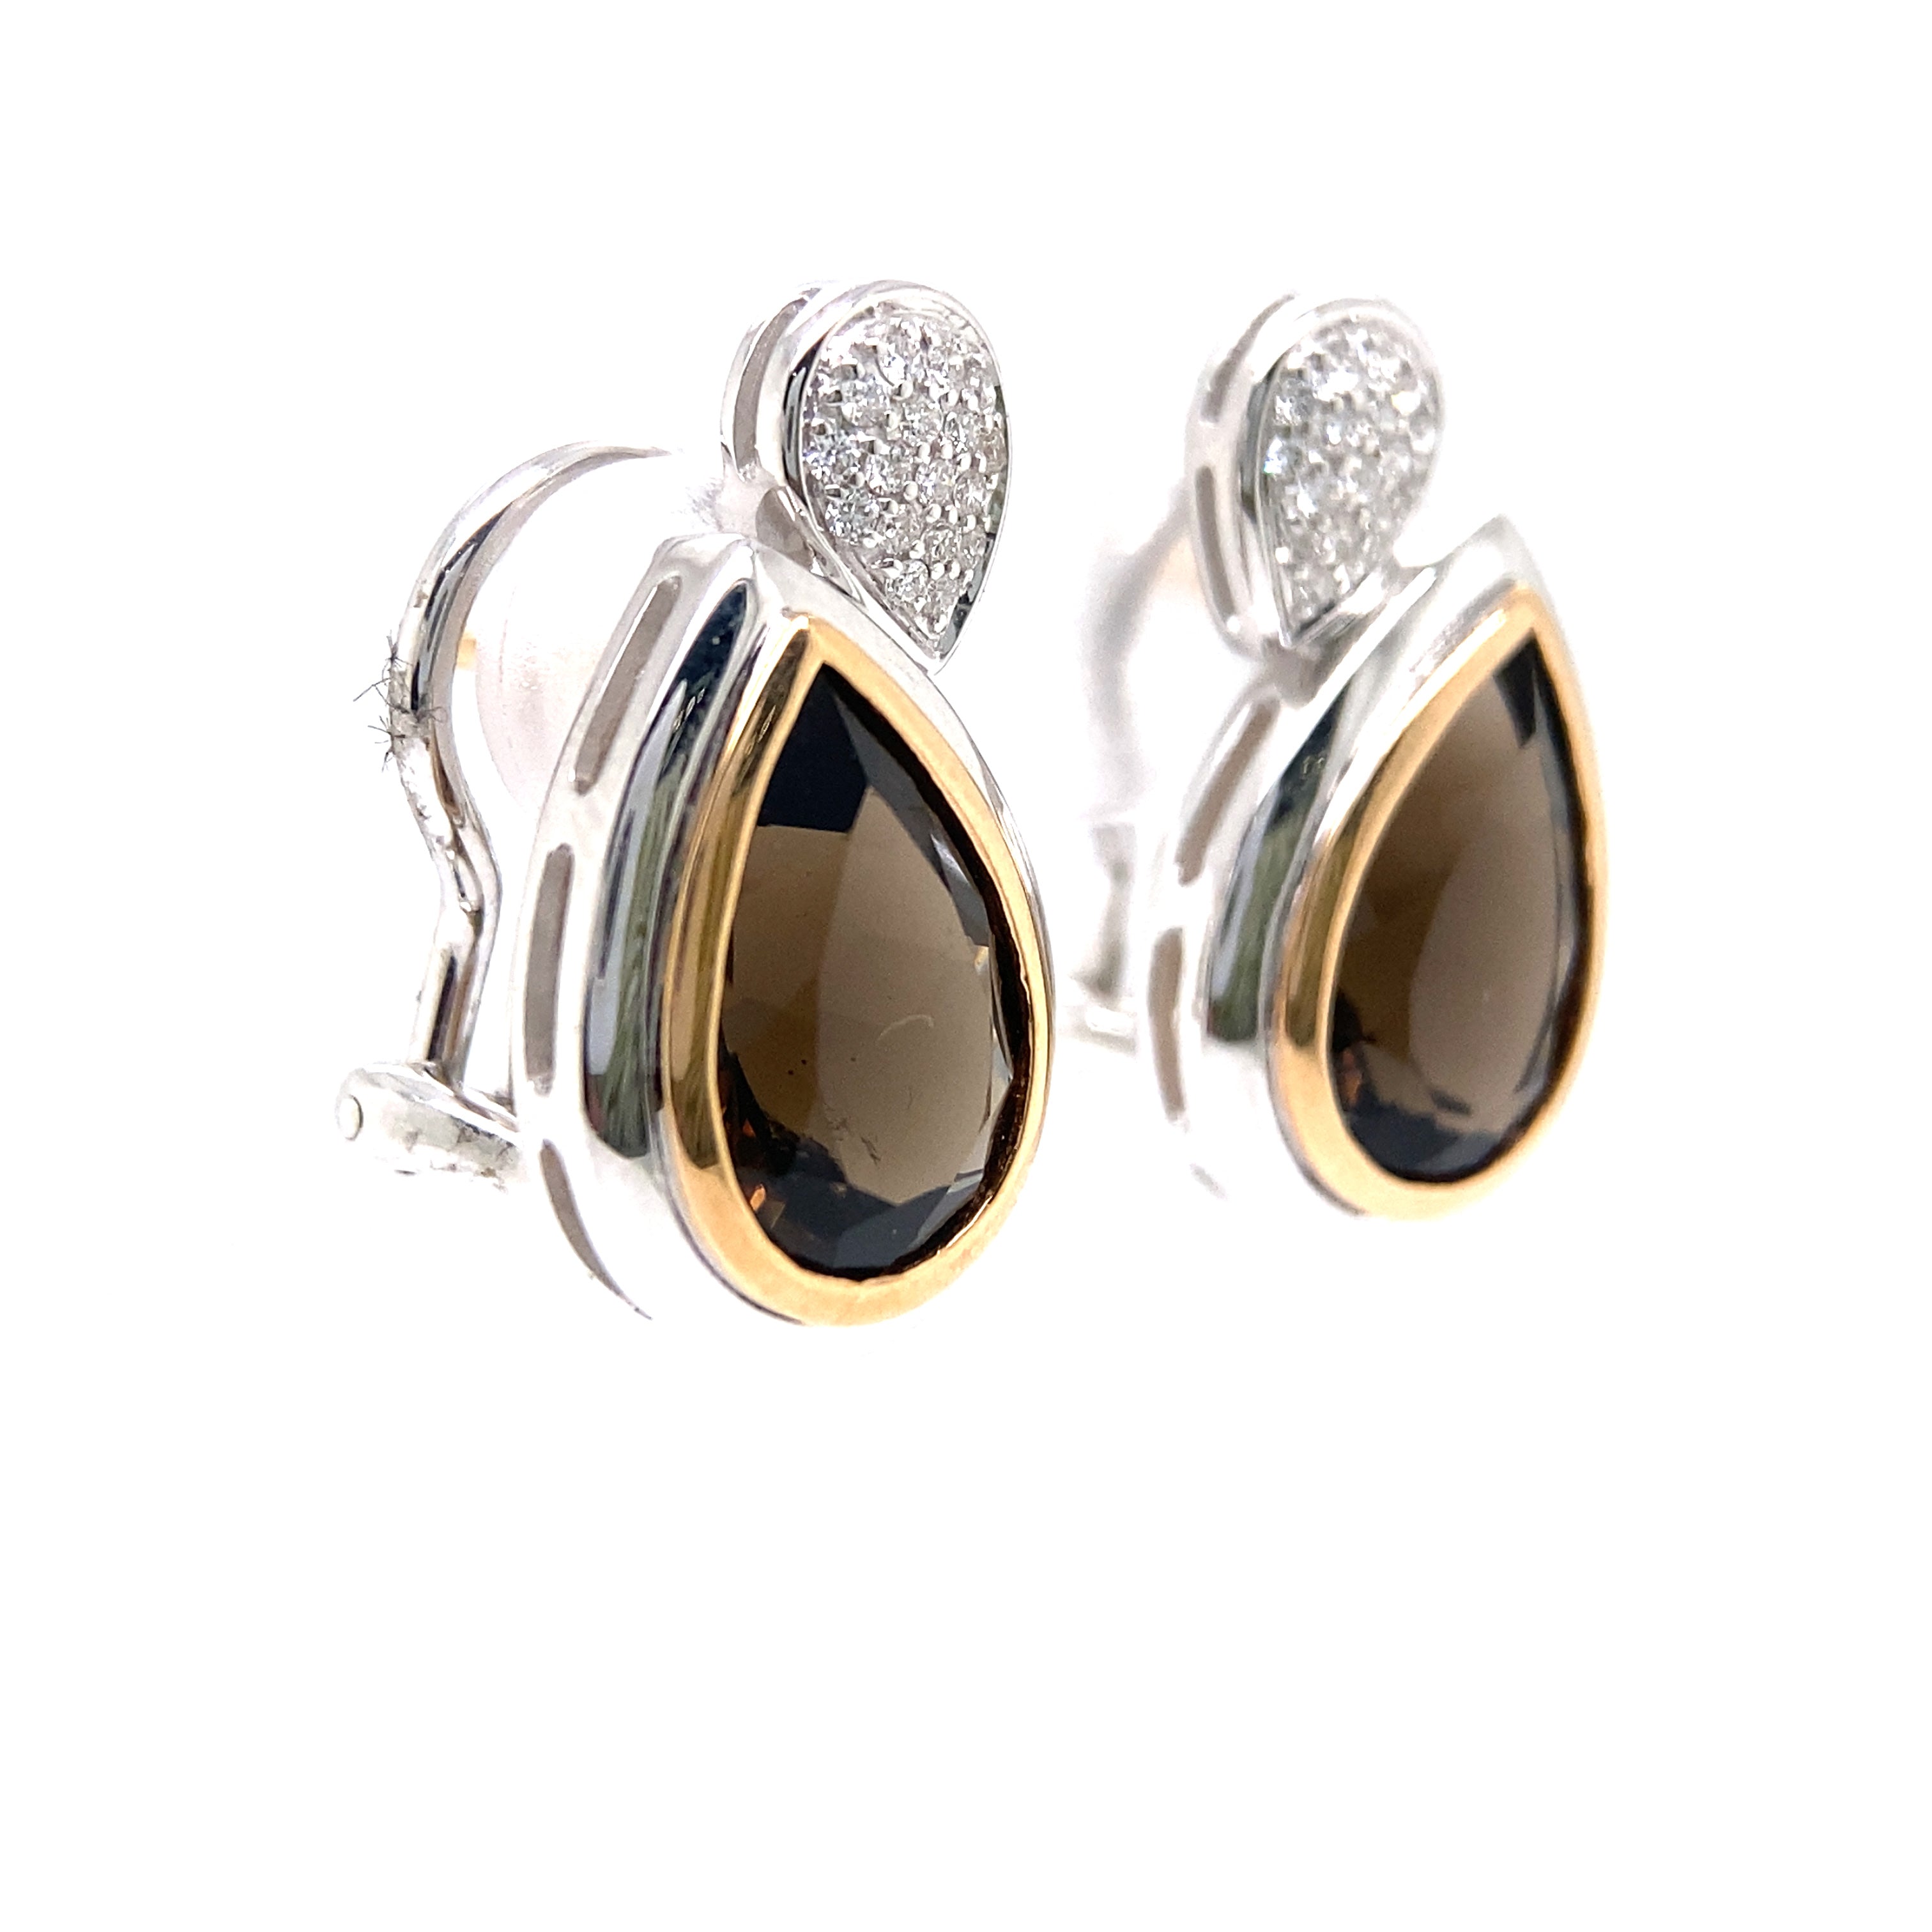 9ct white and rose gold smokey quartz and diamond earrings.